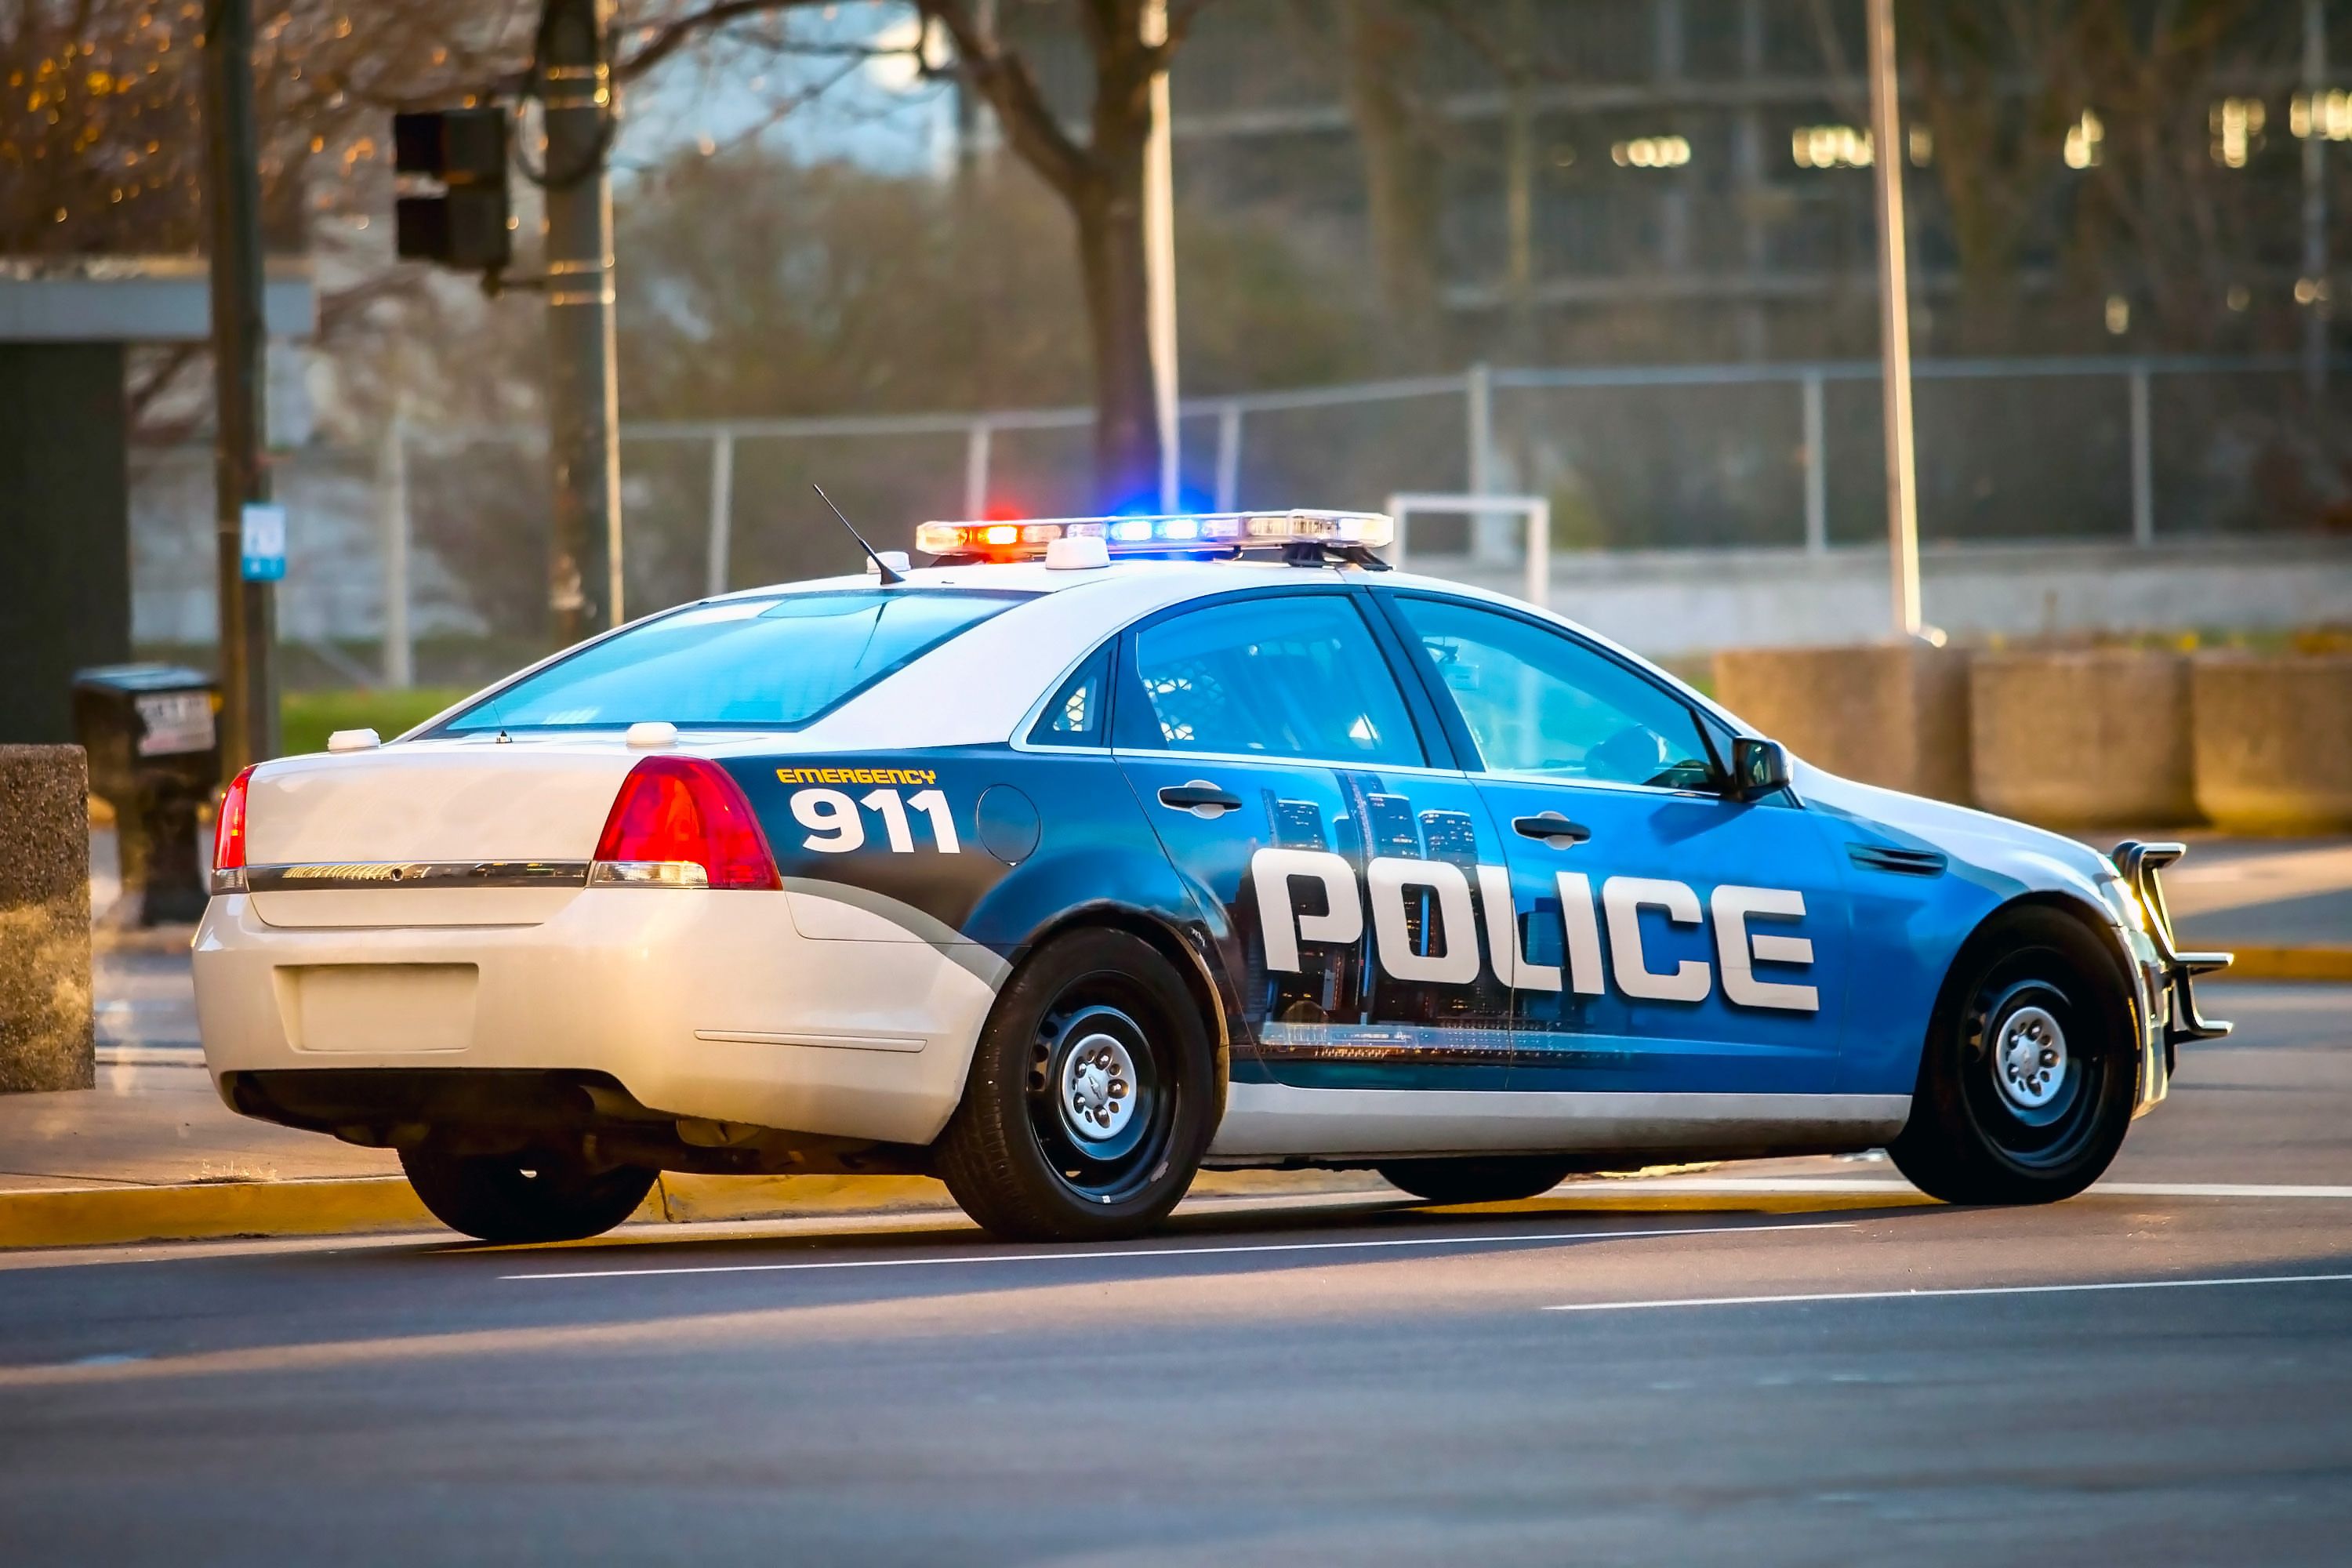 A police car cruising through the street. | Source: Shutterstock